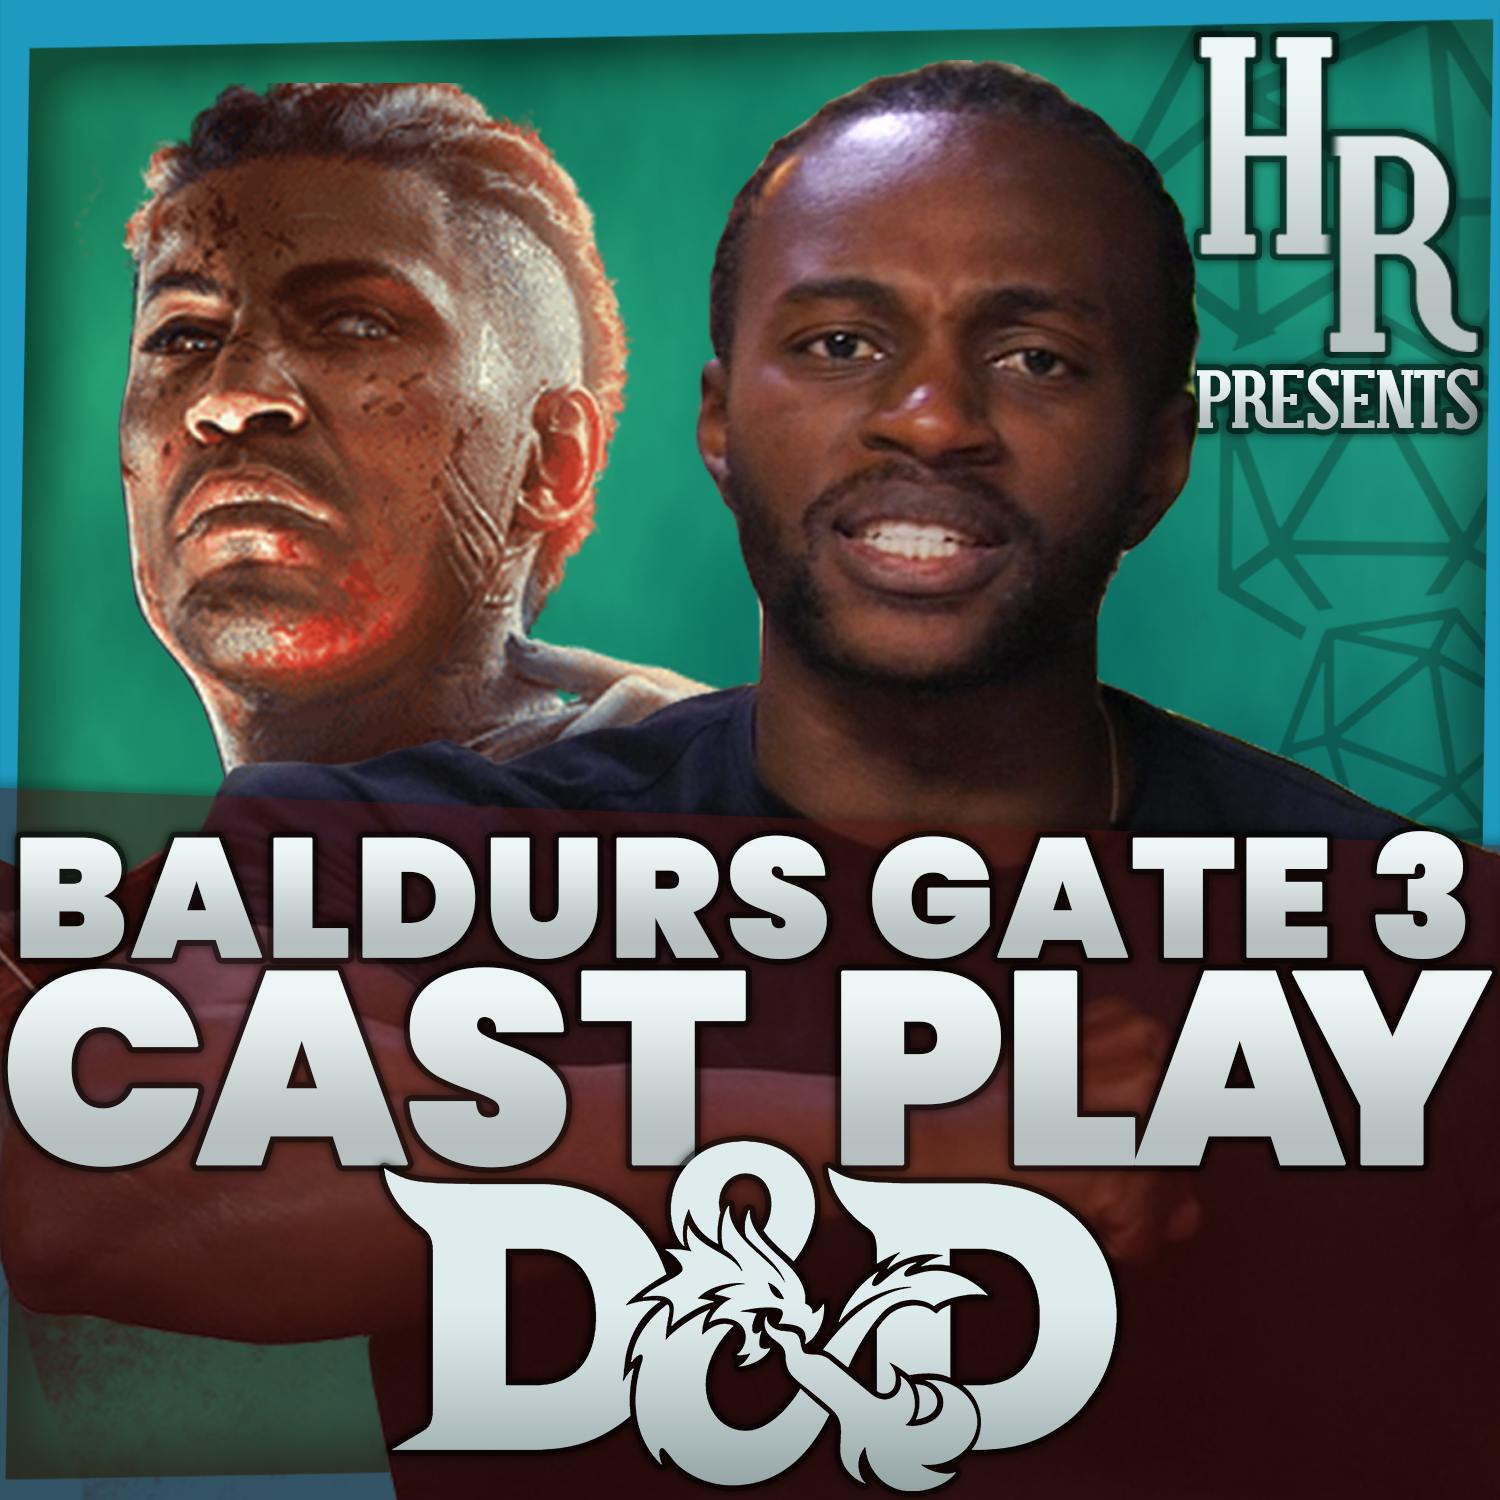 Baldur's Gate 3 Cast play D&D #1 (Part 2) | High Rollers Presents: Shadows of Athkatla